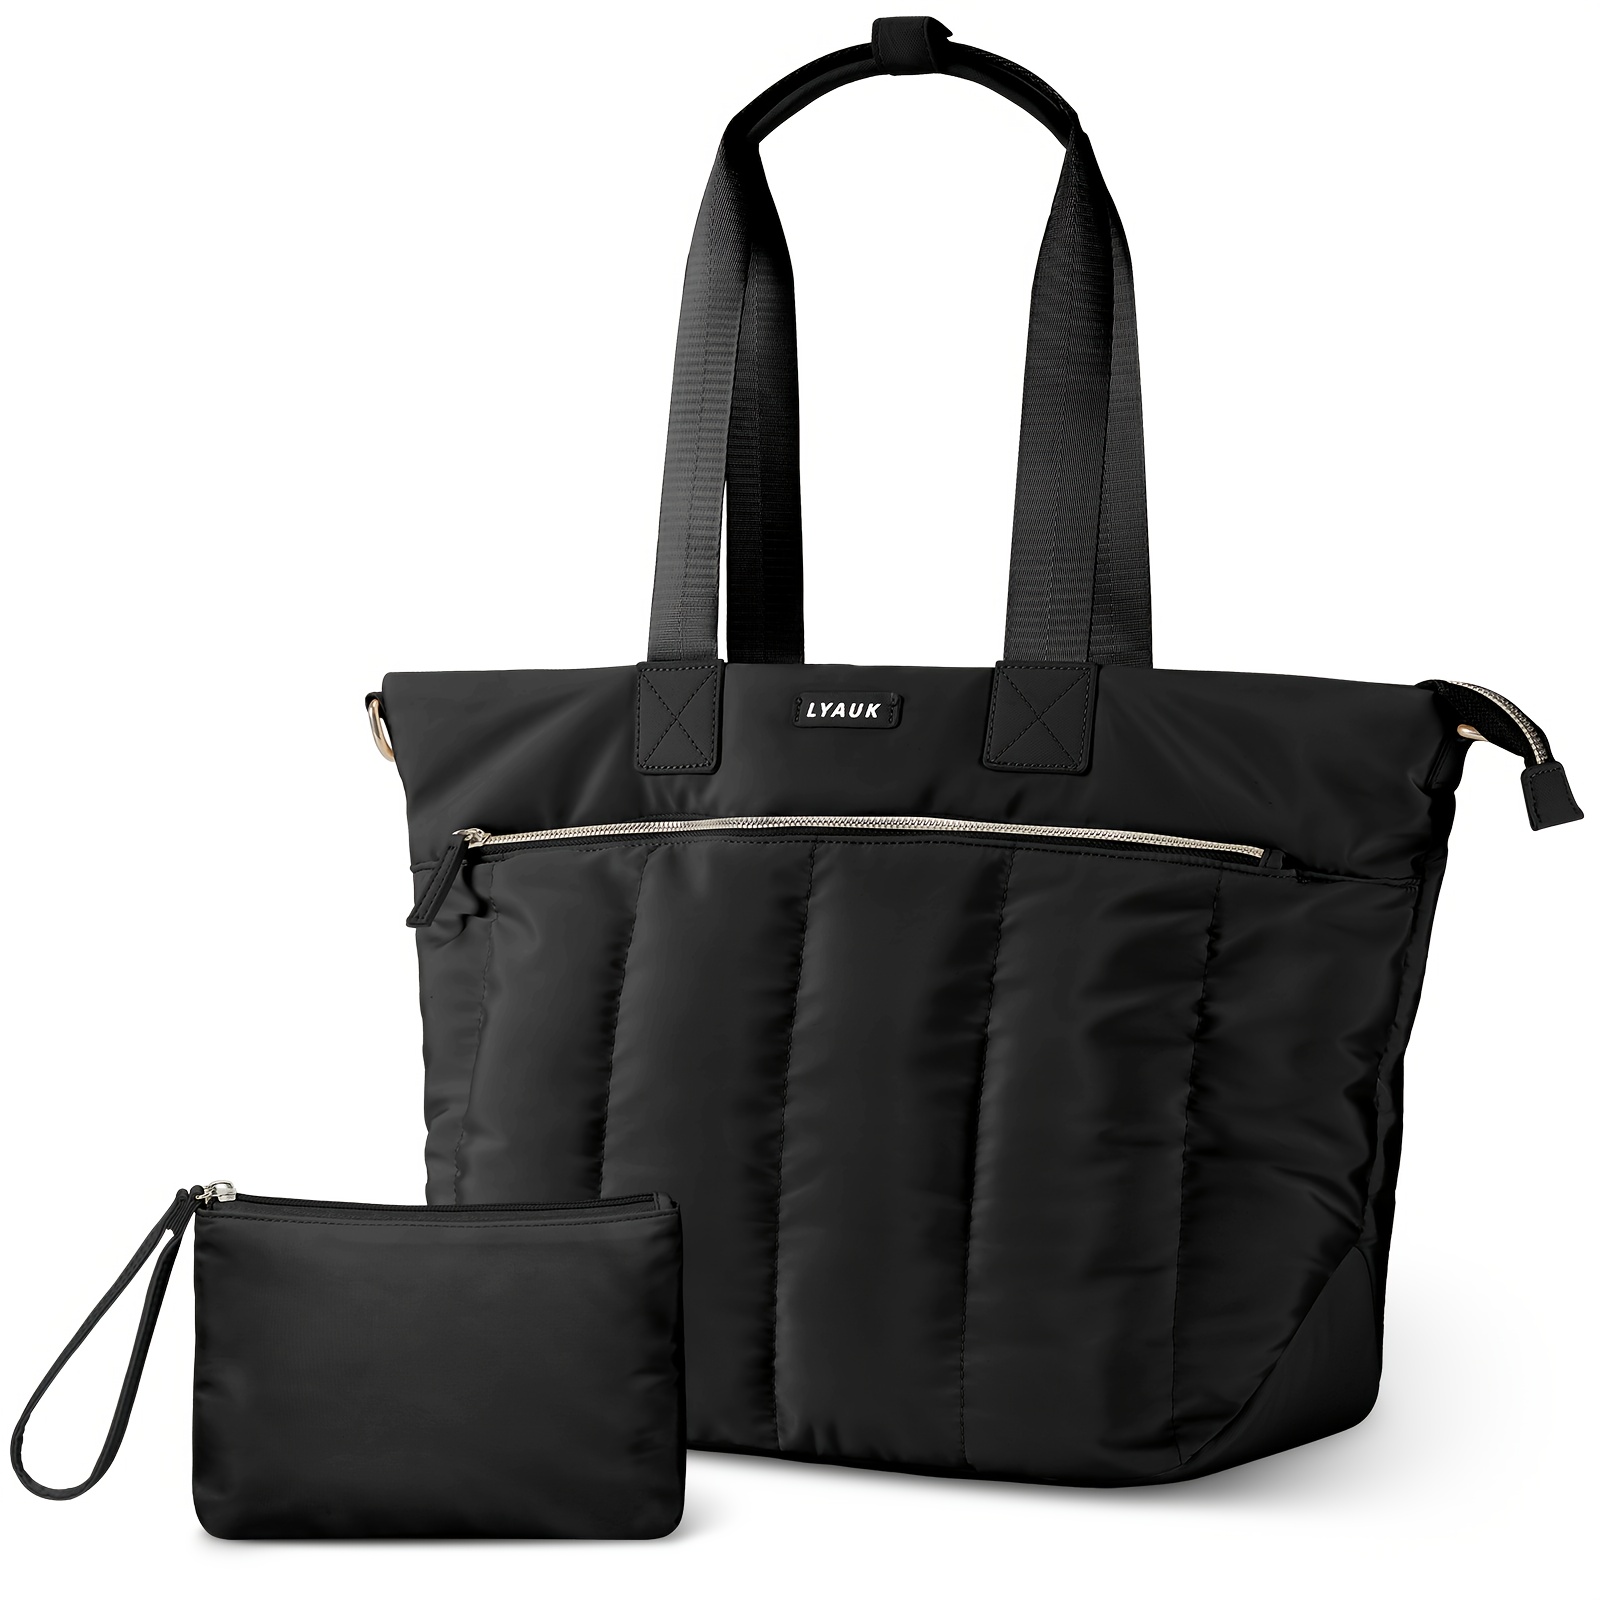 Victoria's Secret Bag For Women,Black - Handbags Sets price in UAE